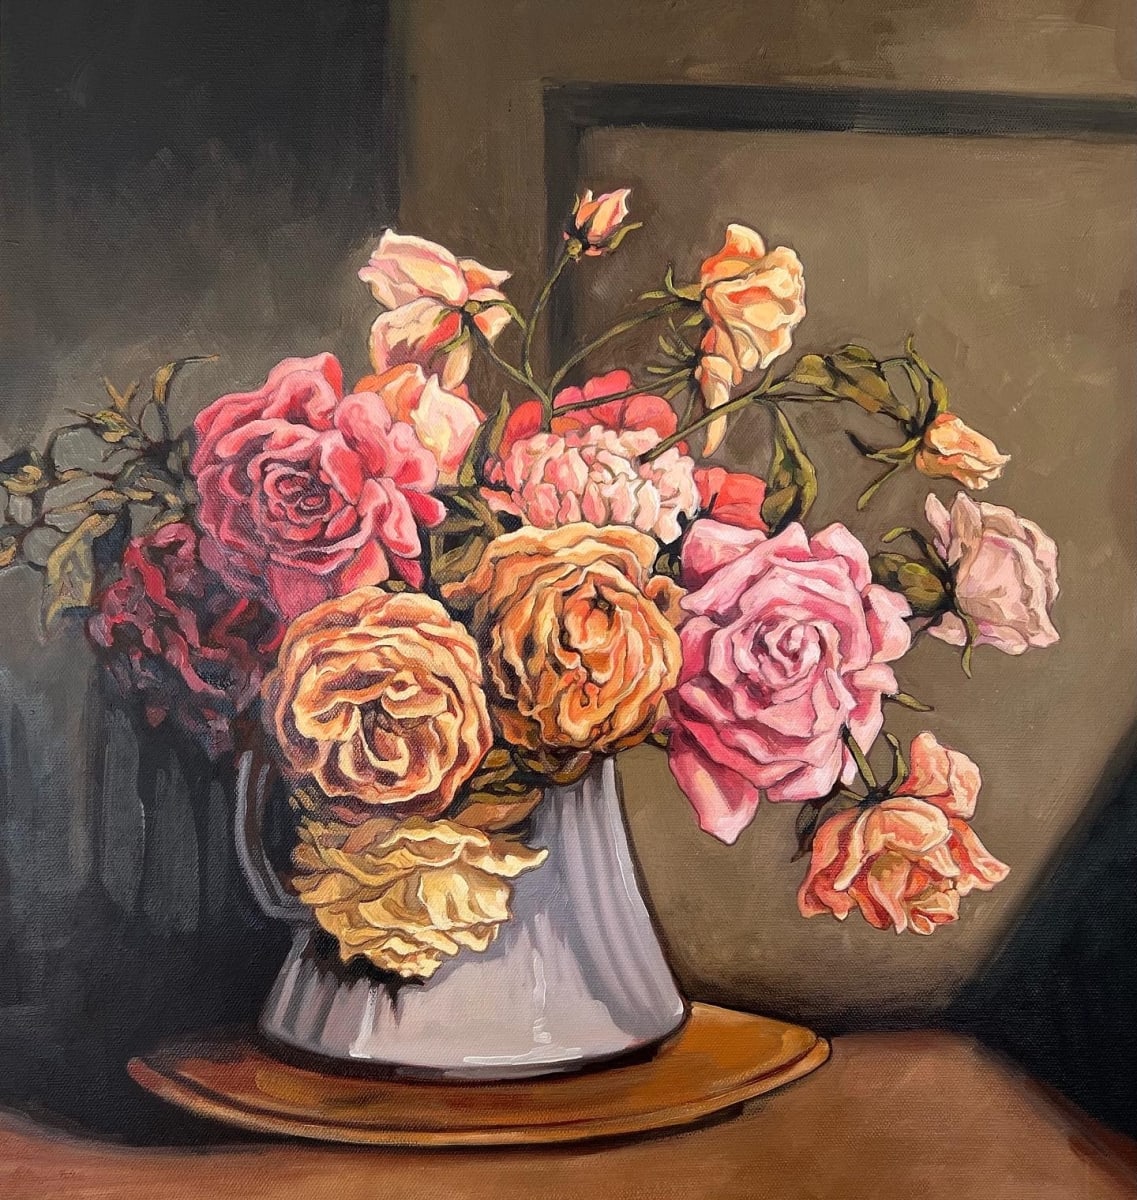 Rose Bomb by Kim Harding  Image: "Rose Bomb" oil on canvas 70 x 50cm